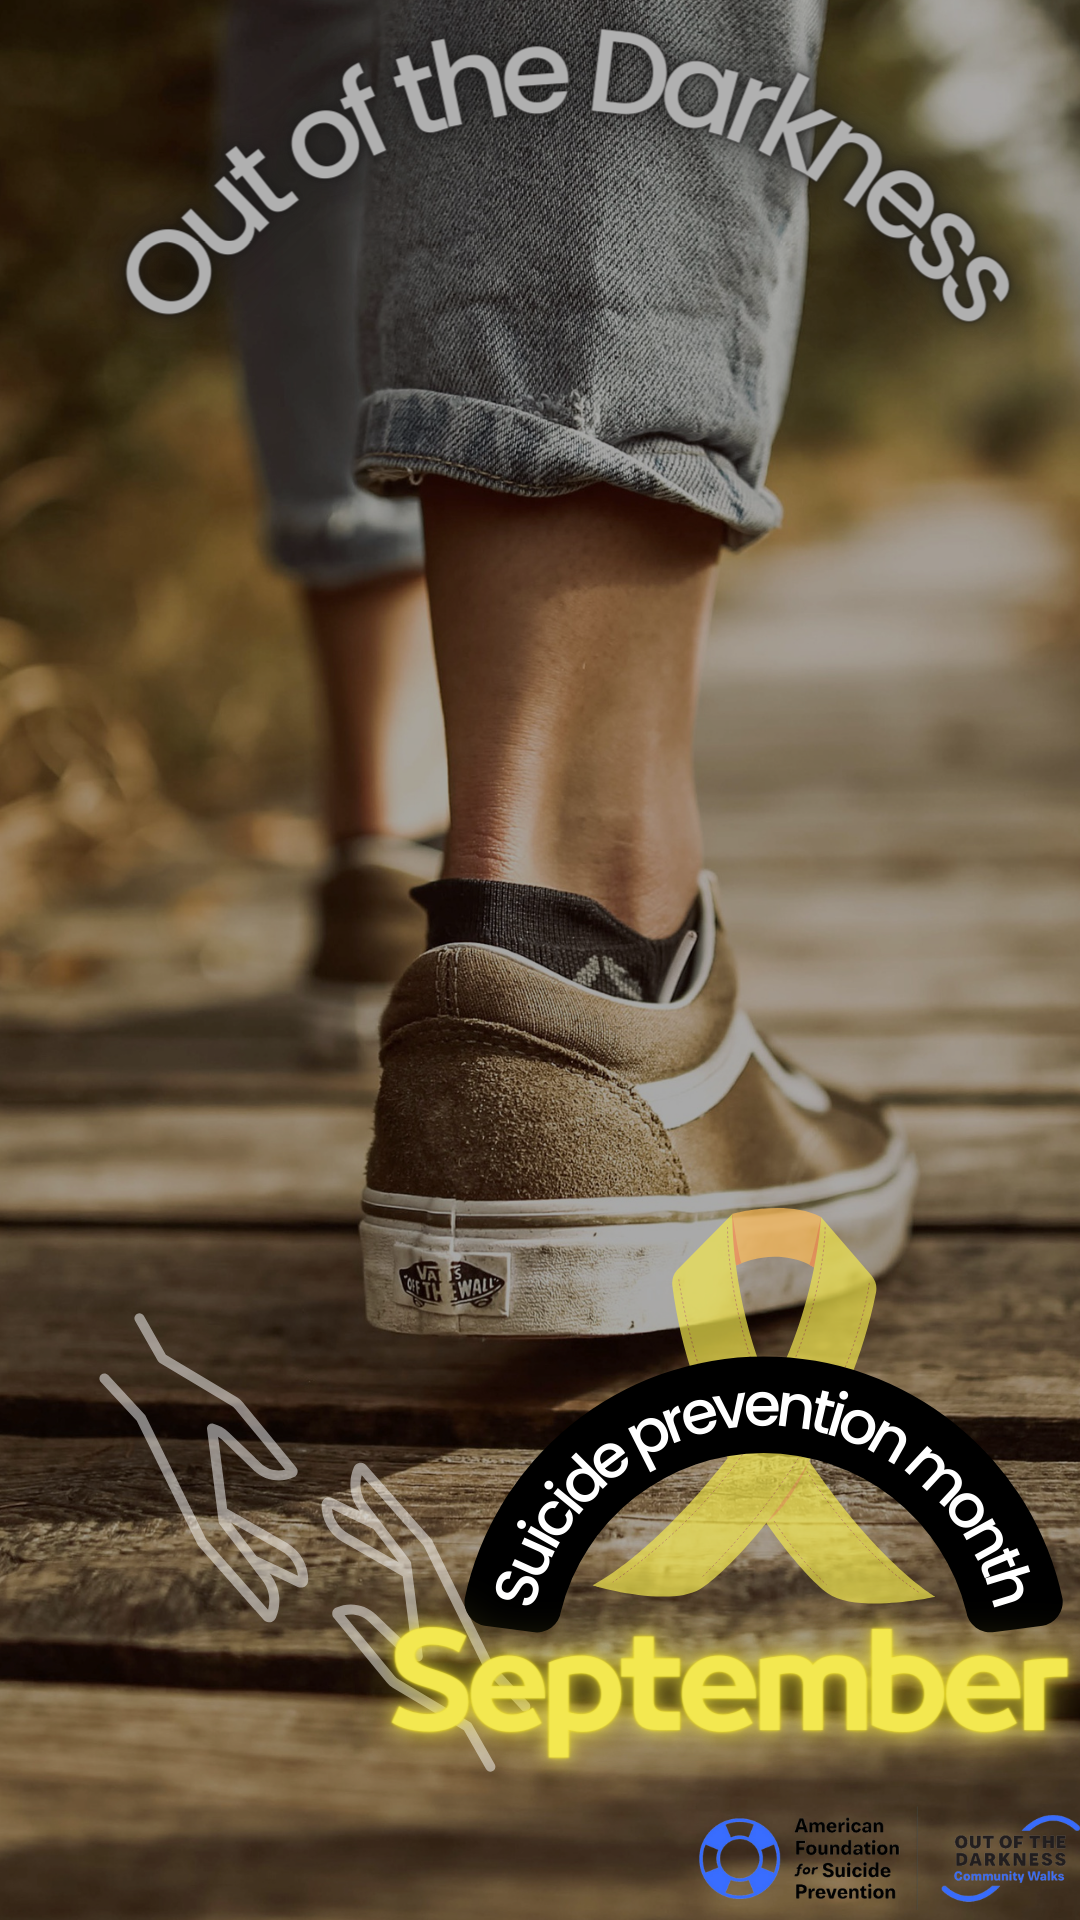 Suicide Prevention Walk Flyer